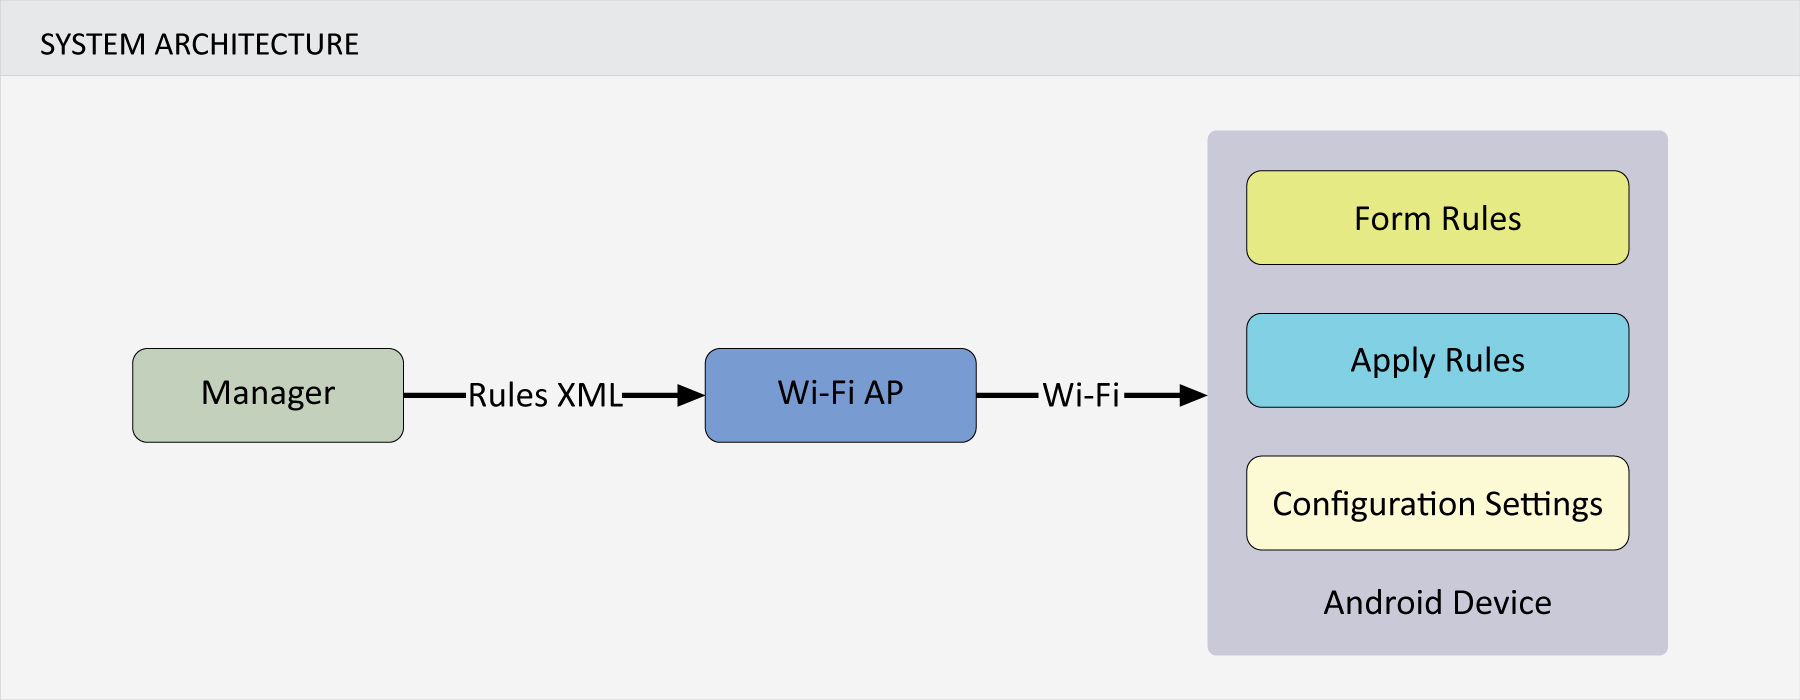 Uplink QoE - System Architecture